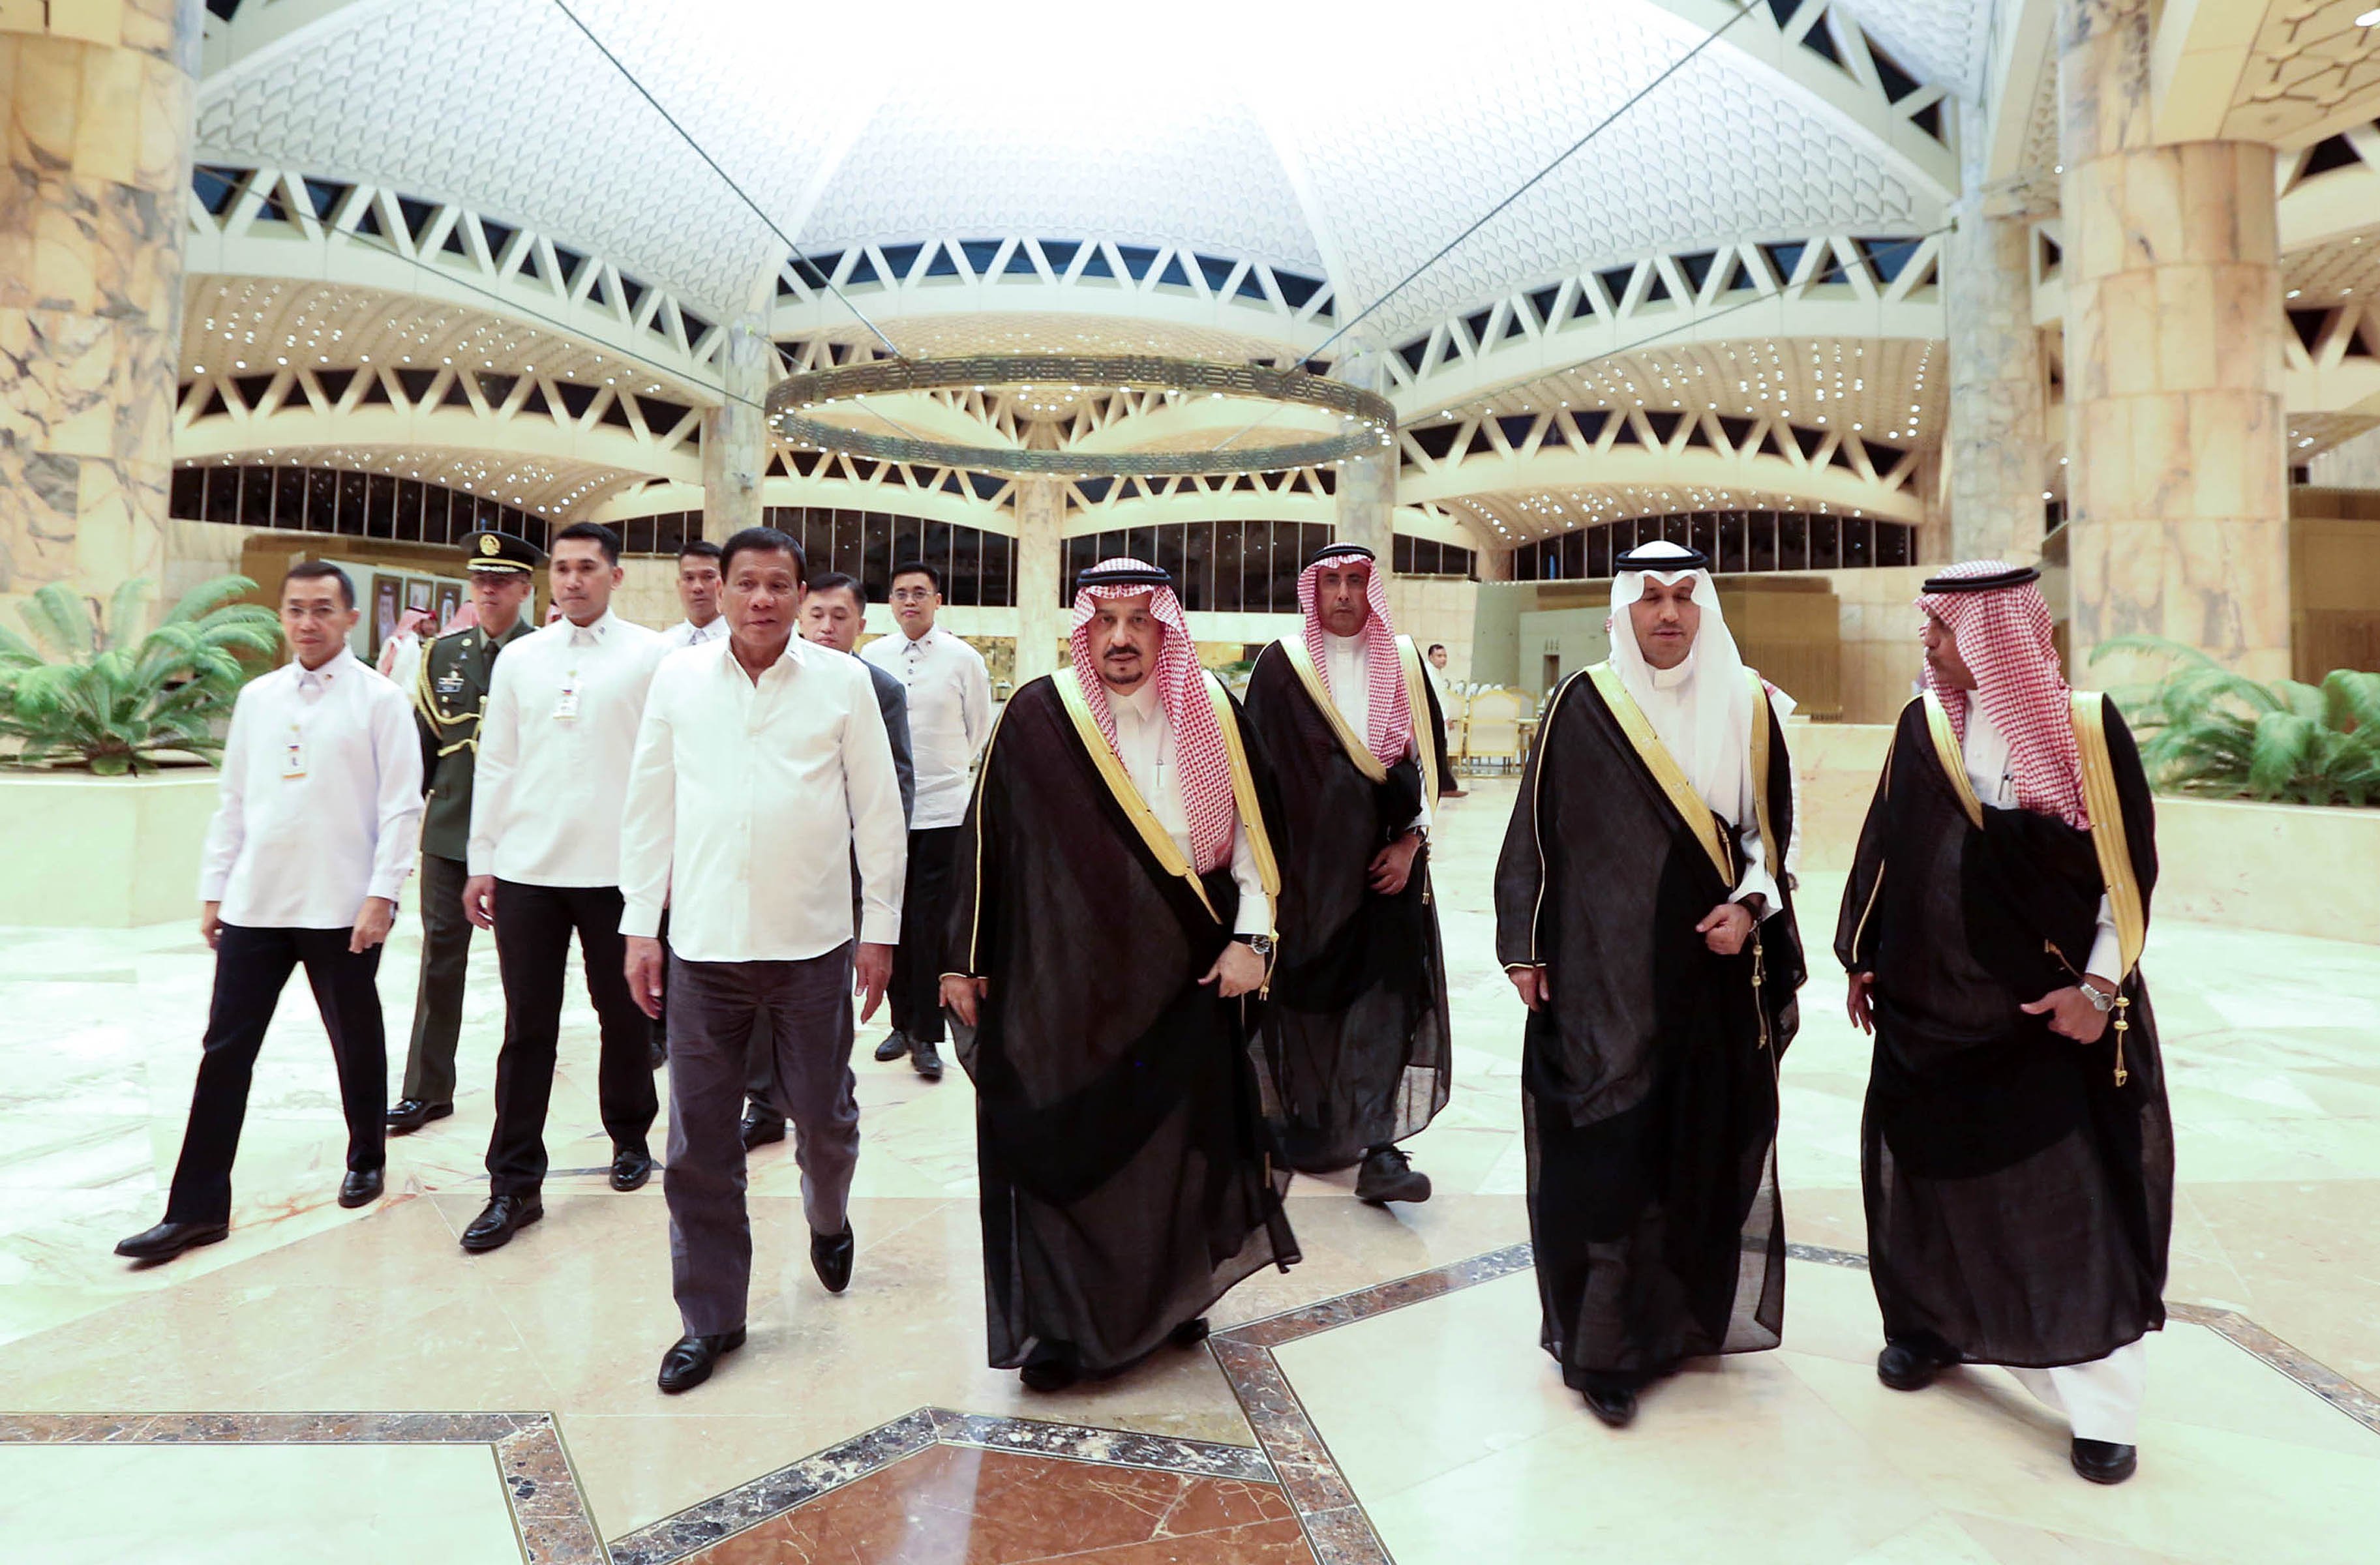 President Duterte is received by Prince Faisal Bin Bandar Al Saud, Governor of Riyadh upon his arrival at the Kingdom of Saudi Arabia